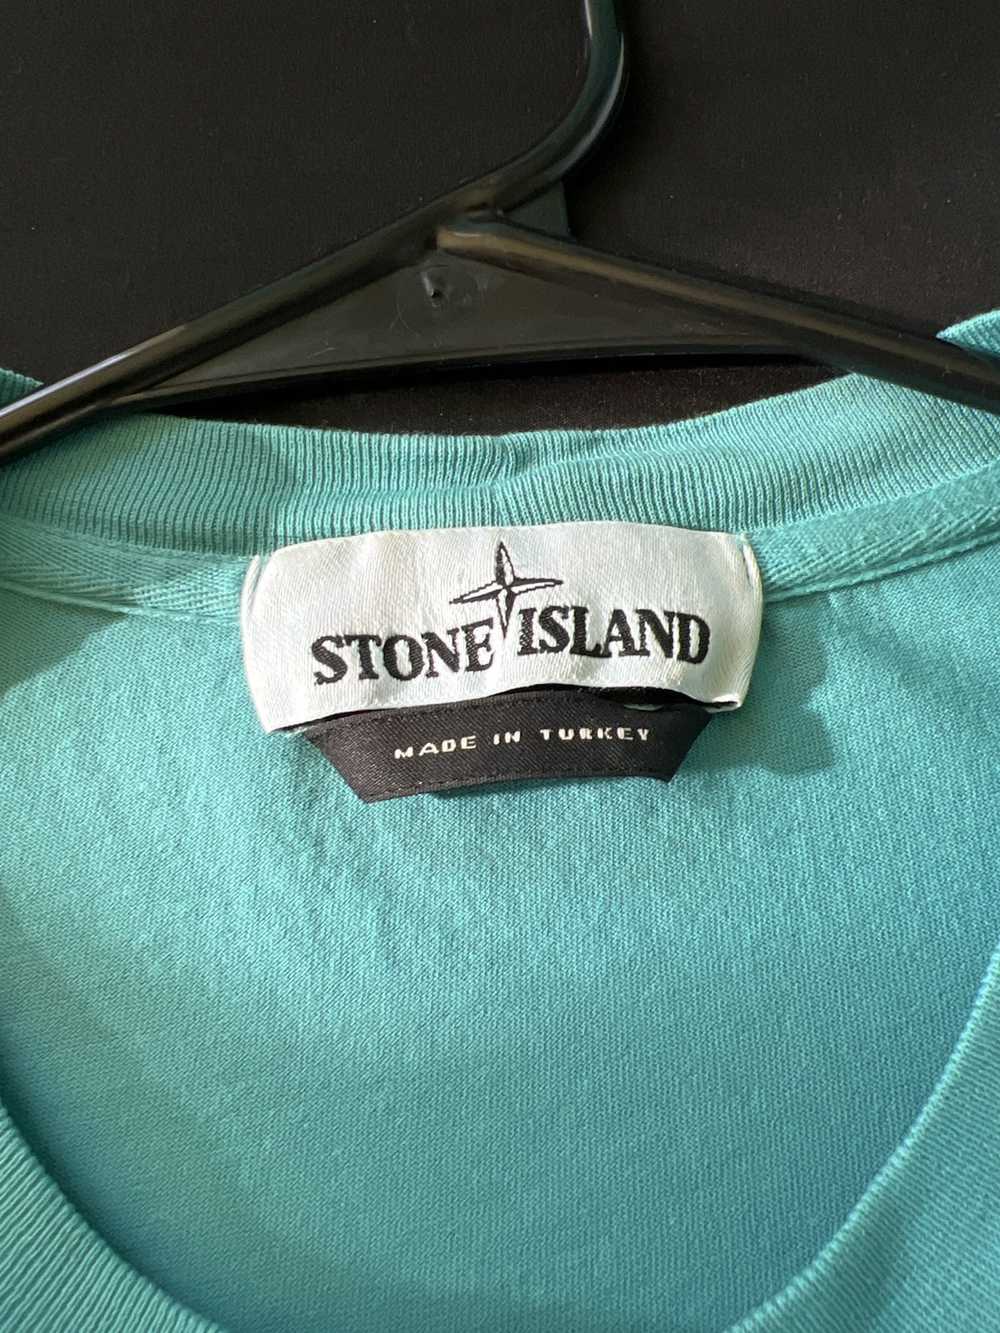 Stone Island Stone island patch tee - image 7